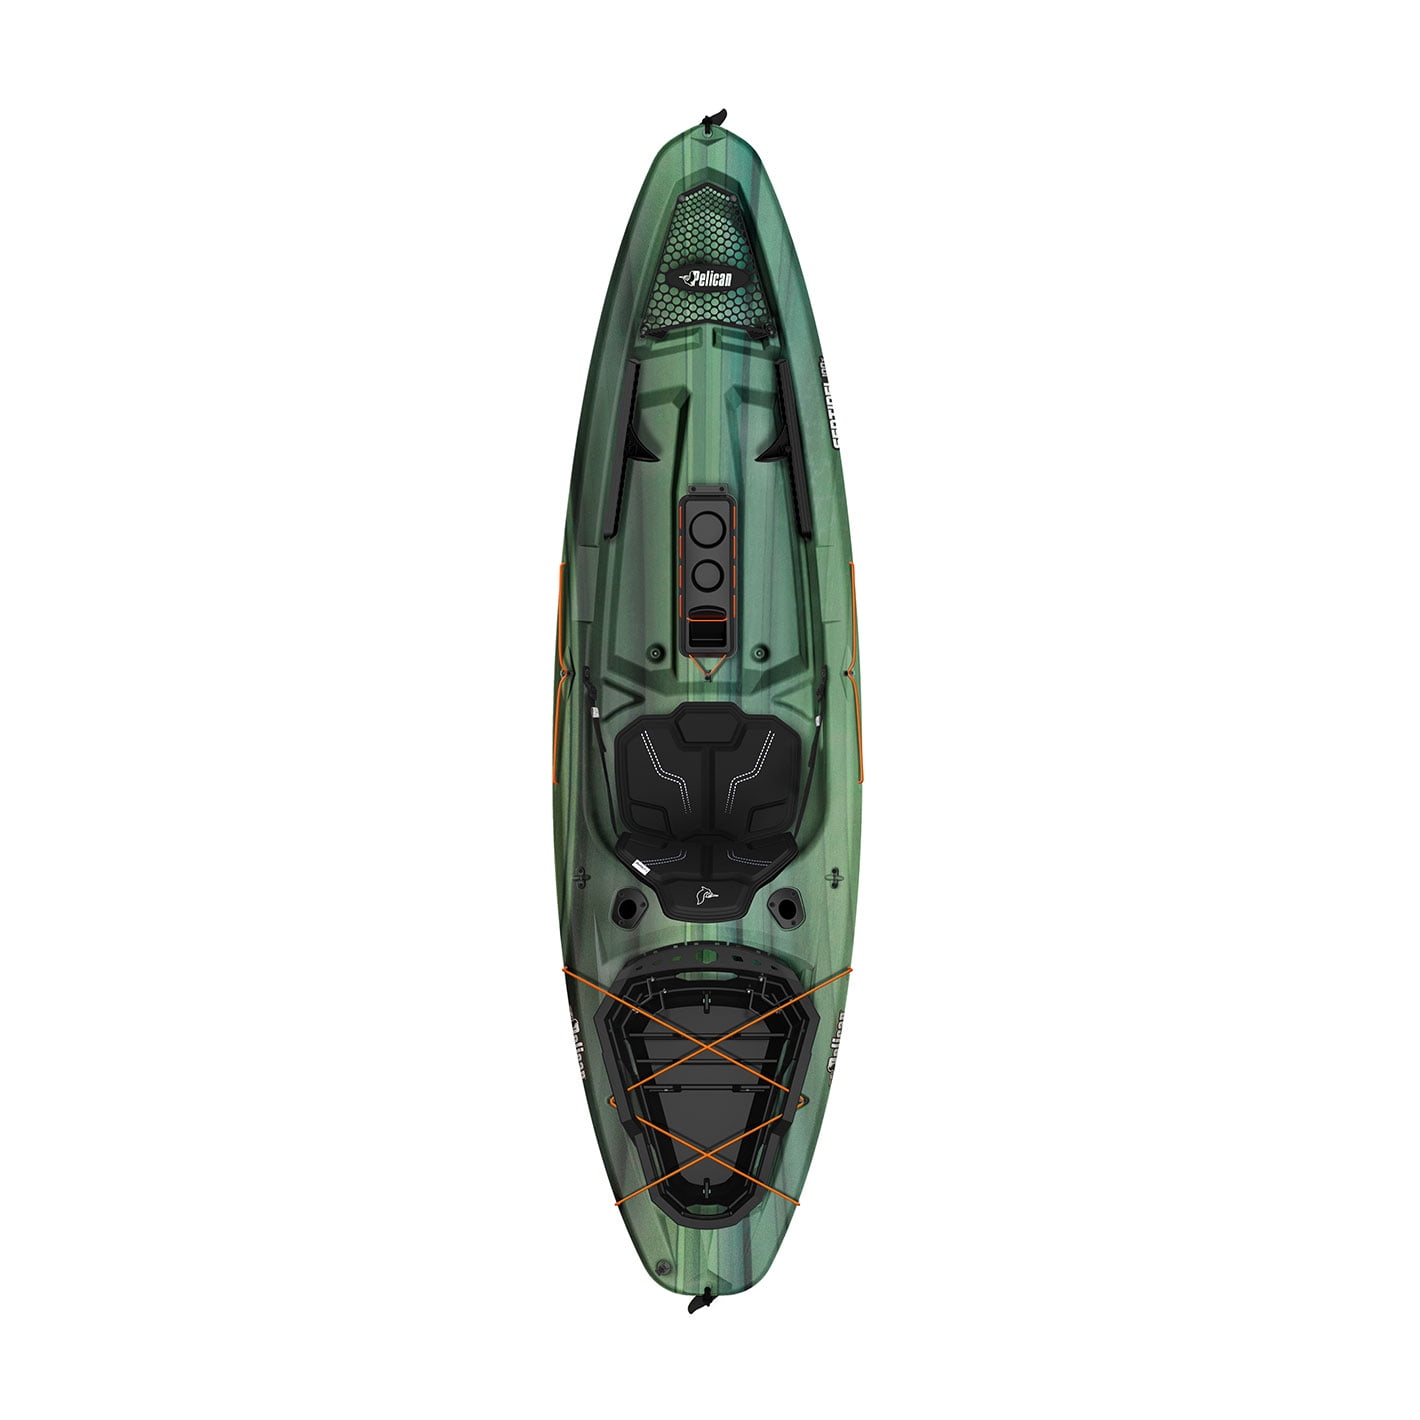 Pelican - Sentinel 100X - Angler Fishing Kayak - 10 ft - Fade Black Green 